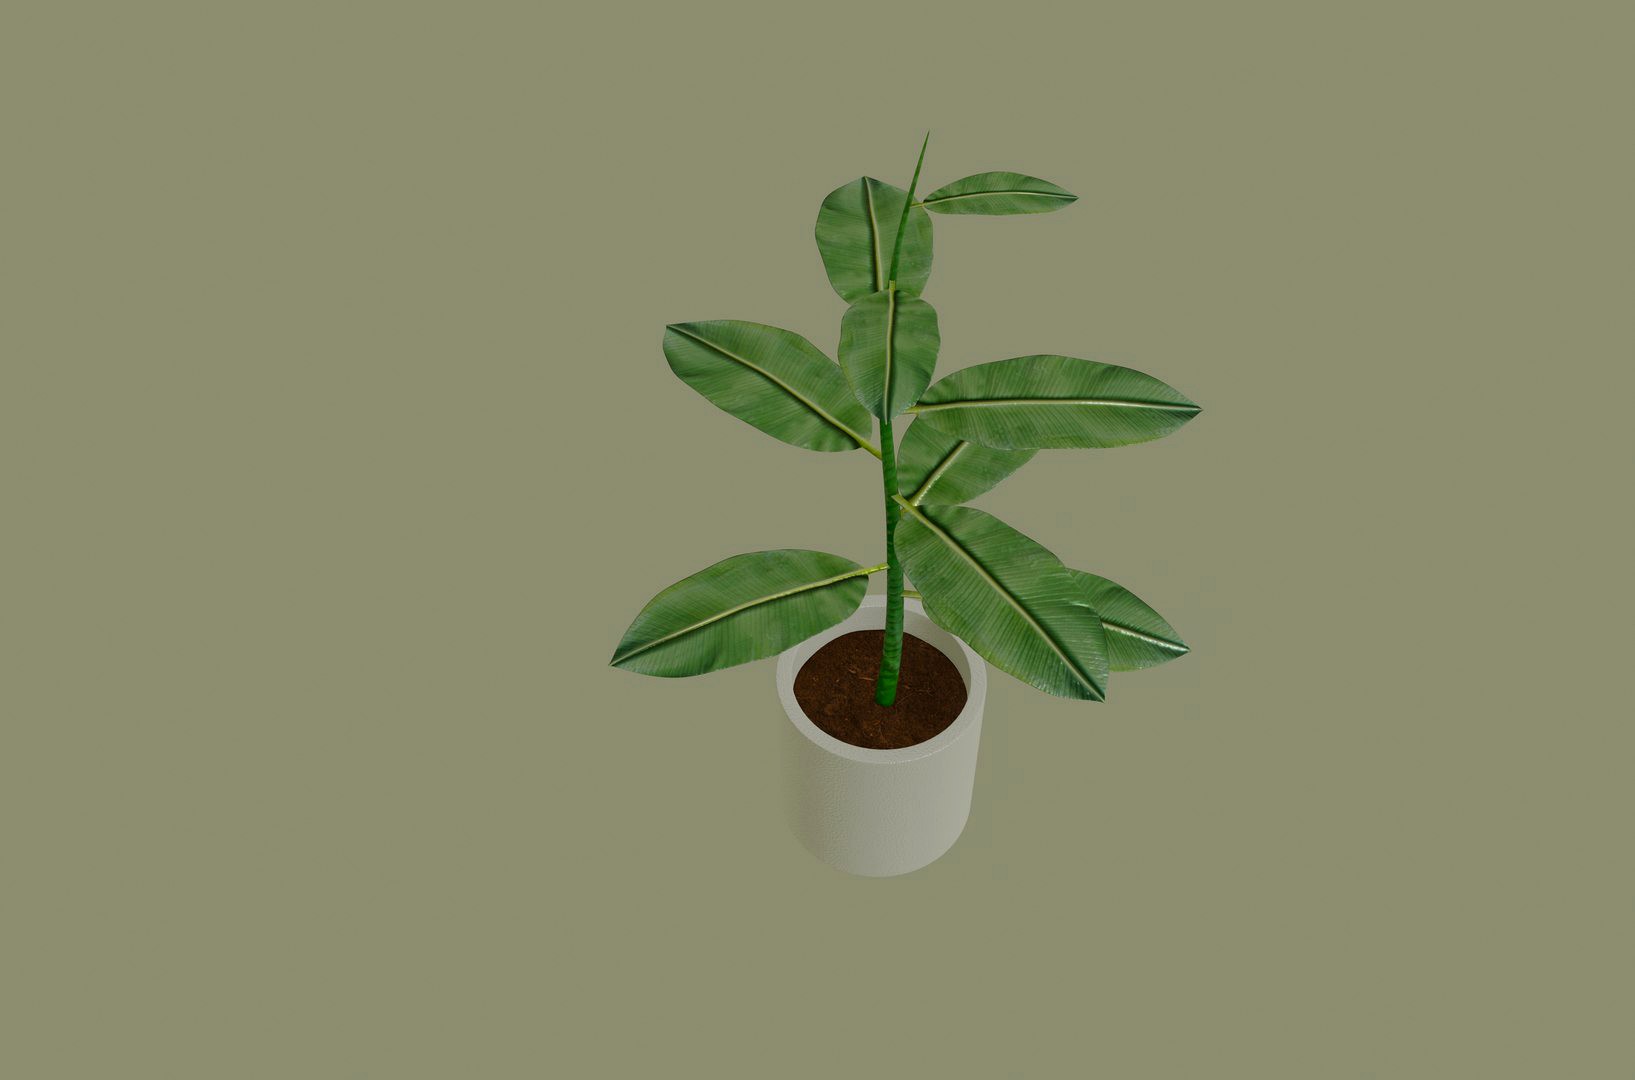 Exotic Indoor Plant